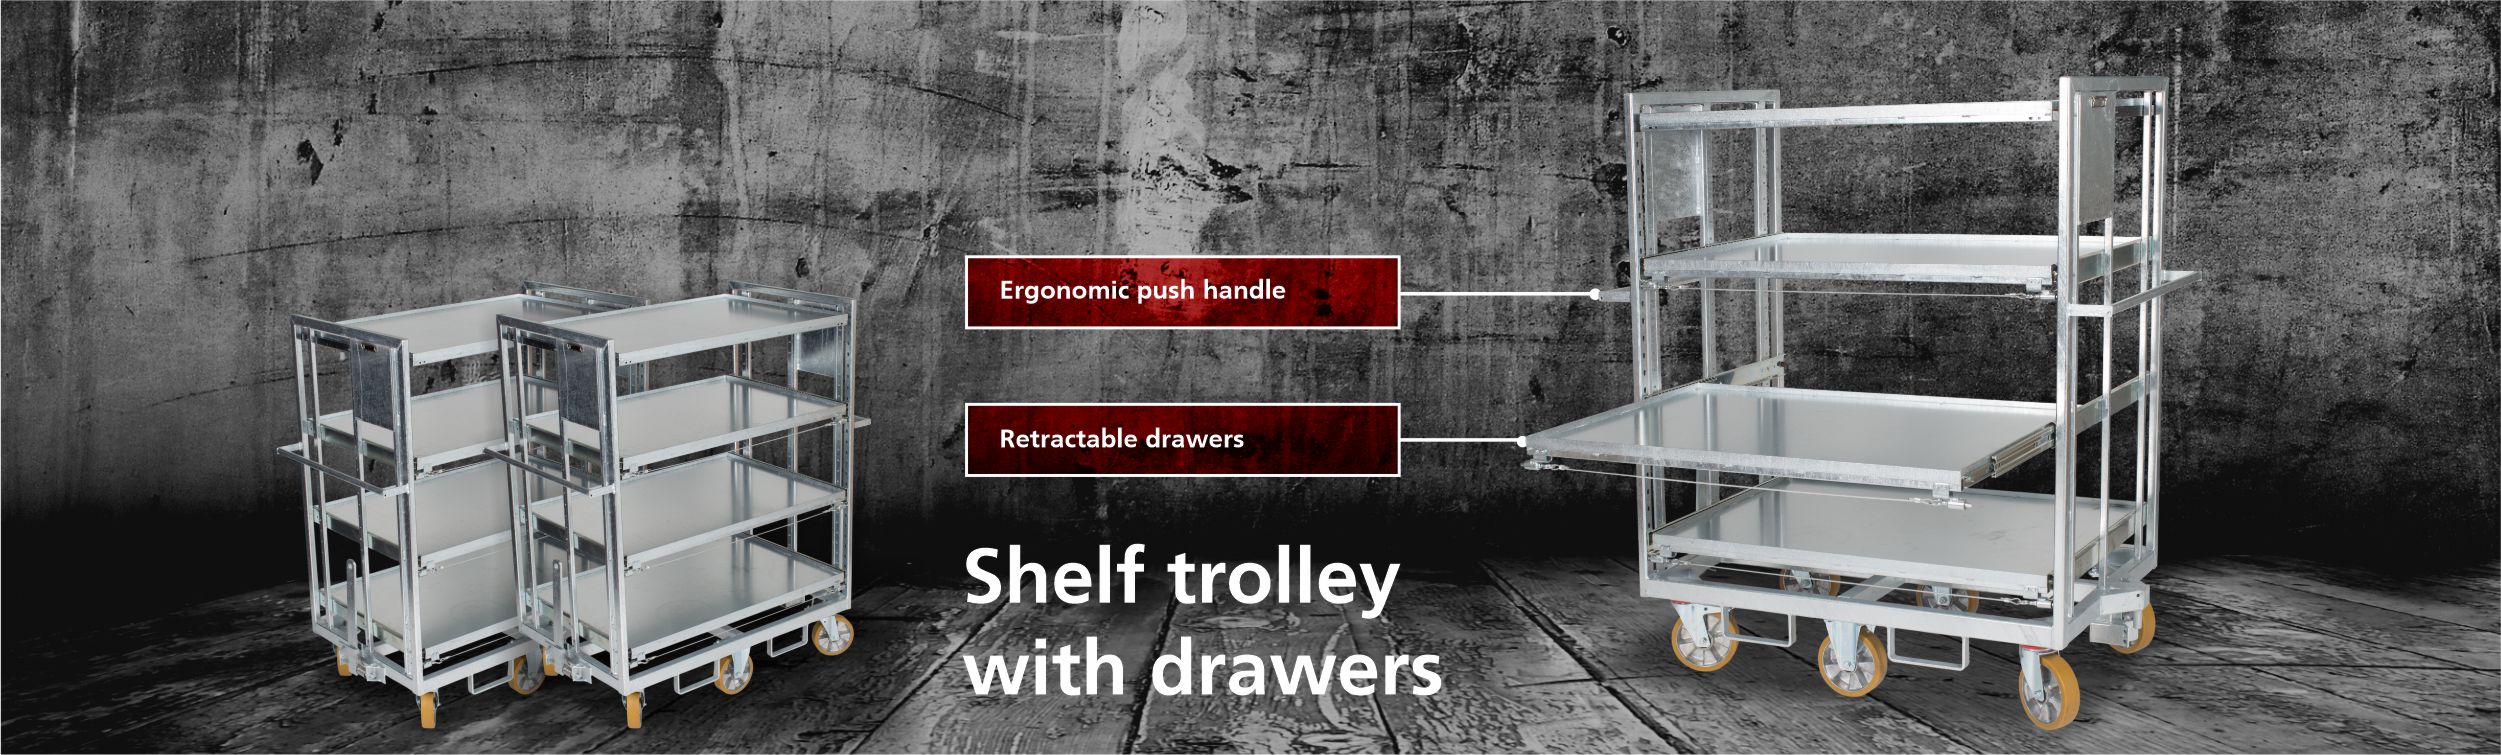 shelf_trolley_with_drawers